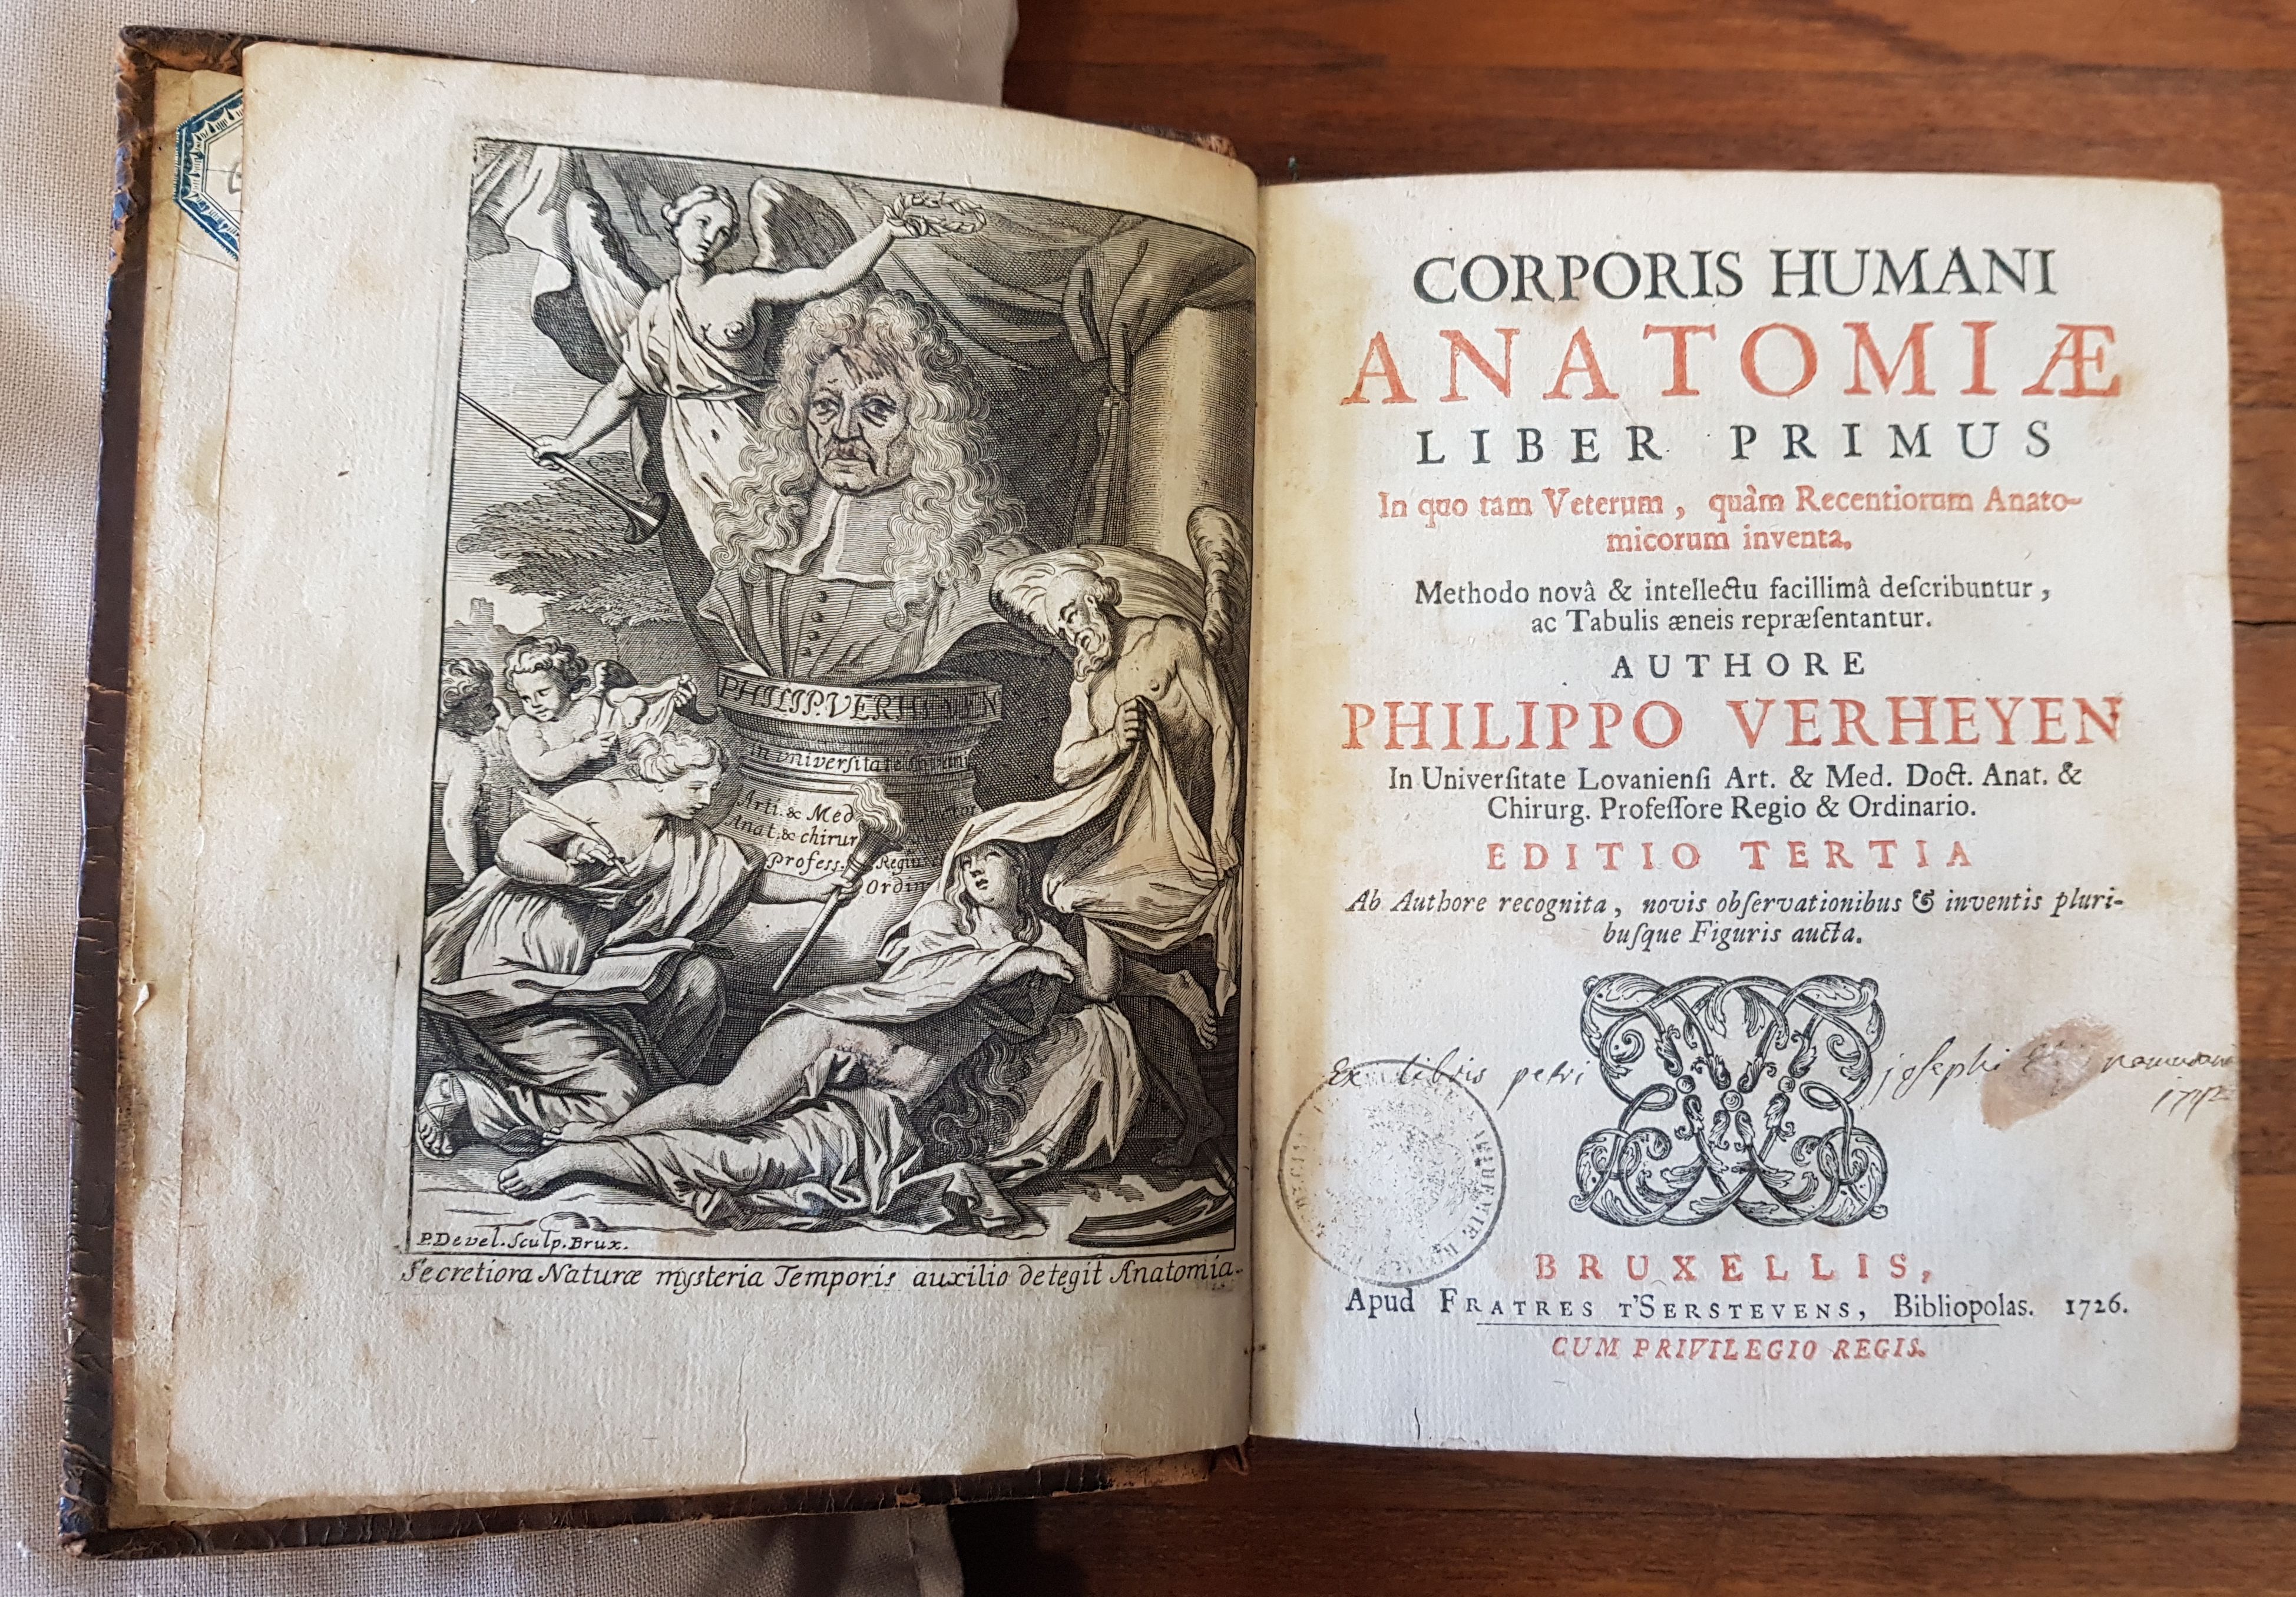 Corporis humani anatomiae liber primus (1623) - KBR, LP 6.536 A